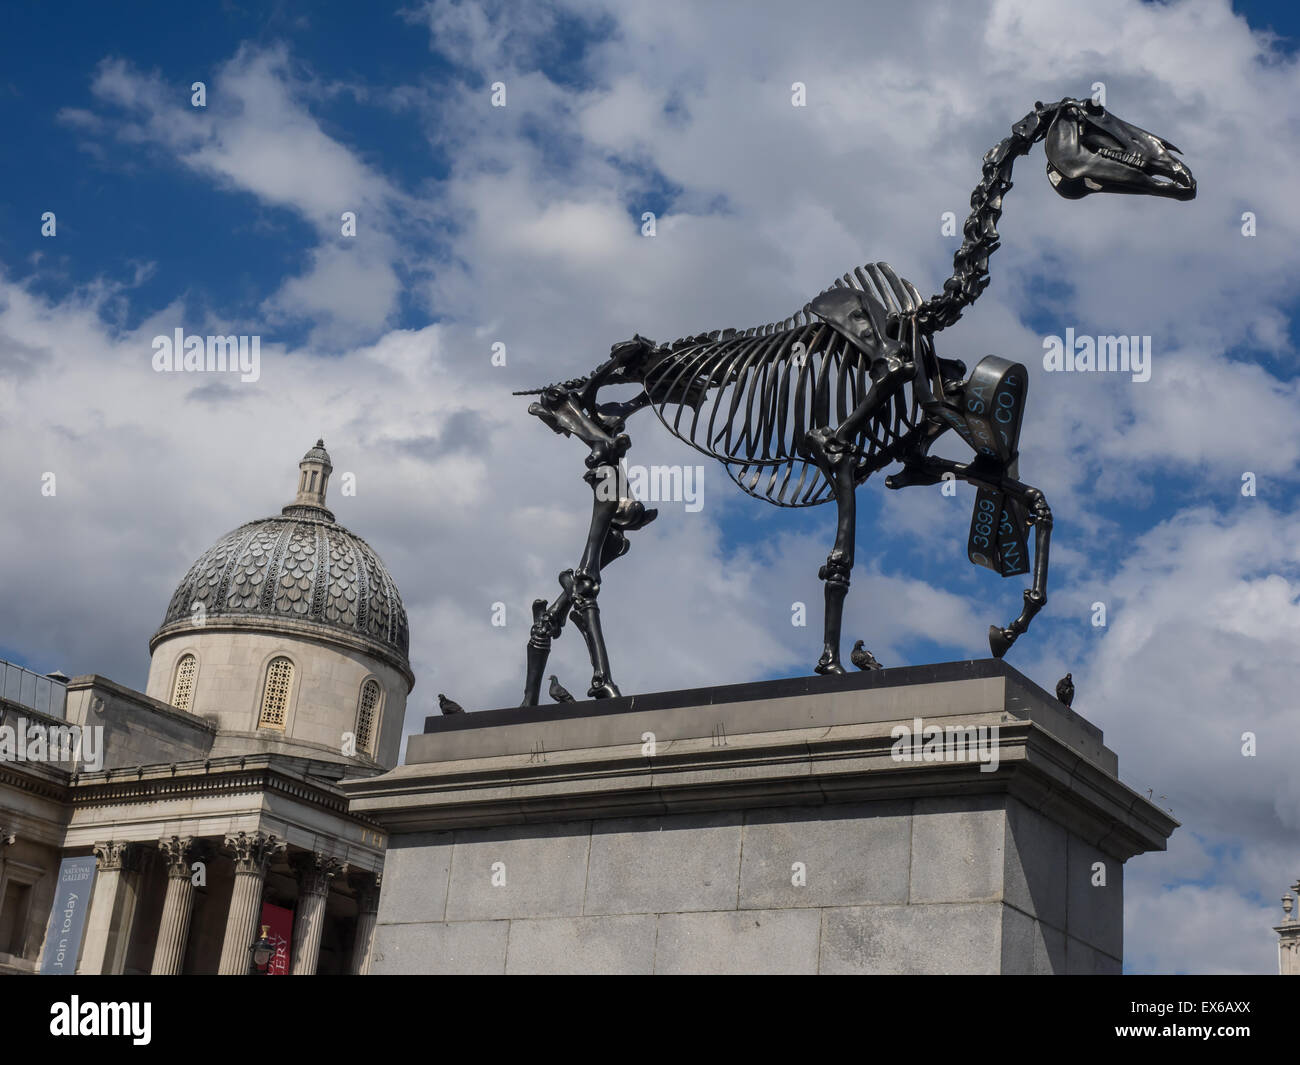 Dinosaur Statue at Trafalgar Square, London, England Stock Photo